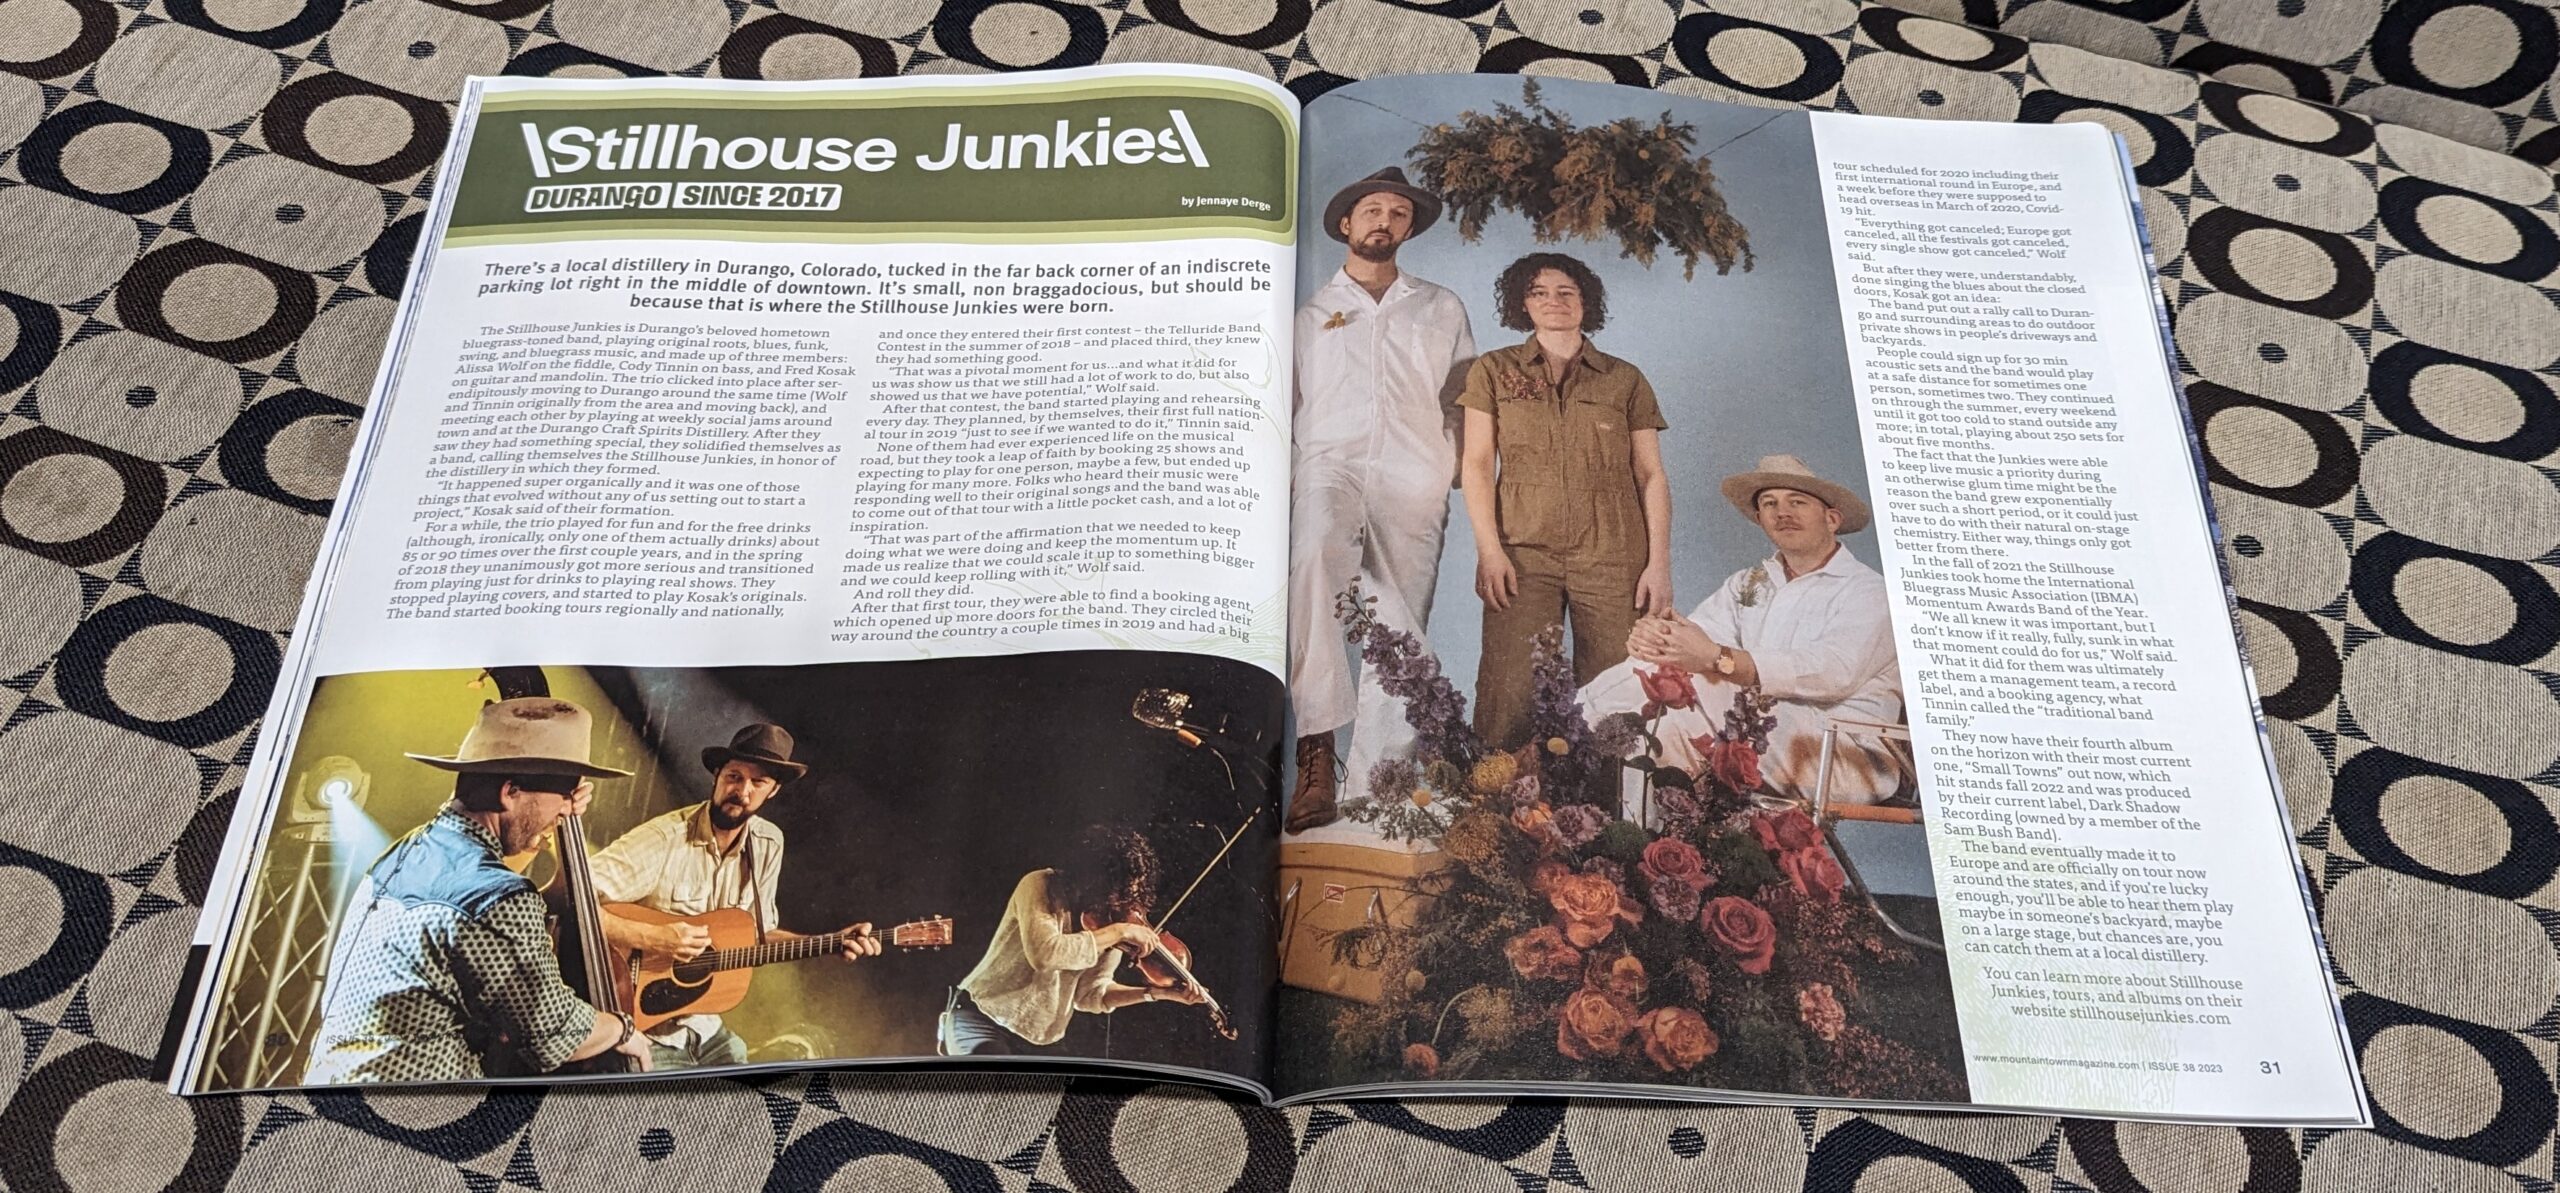 Stillhouse Junkies magazine spread